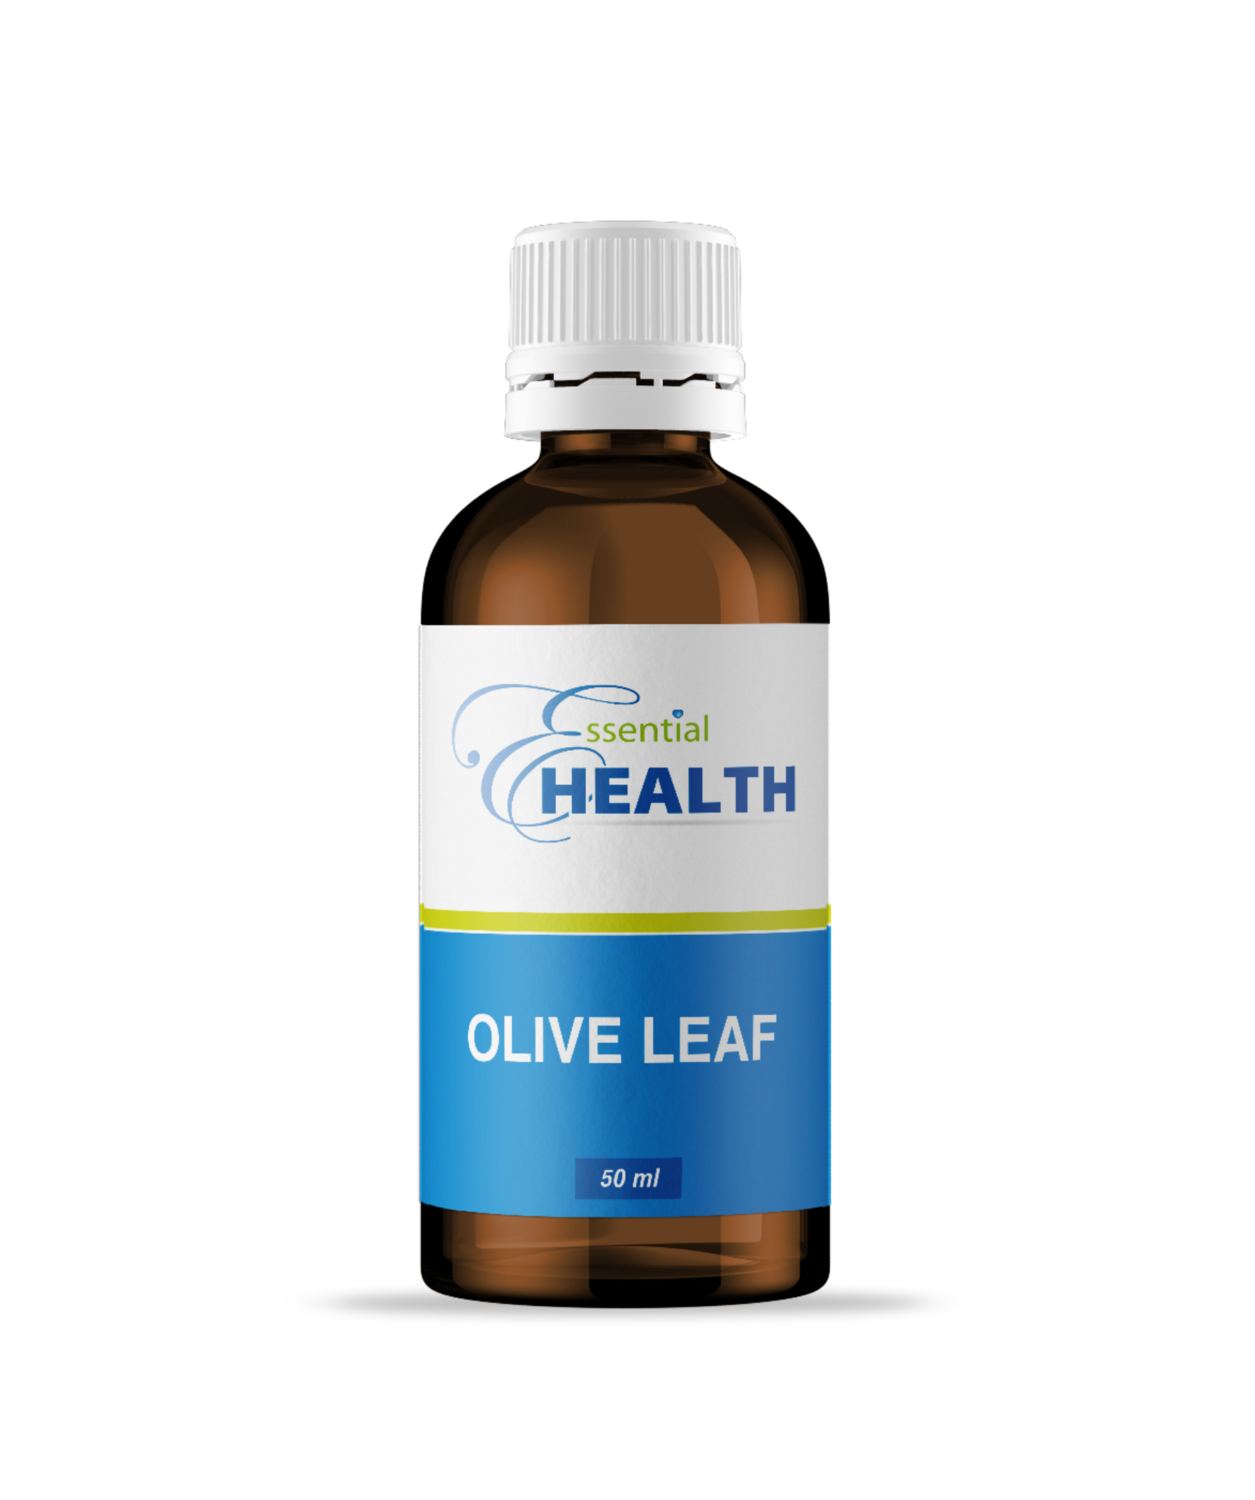 Essential Health Olive Leaf 50ml